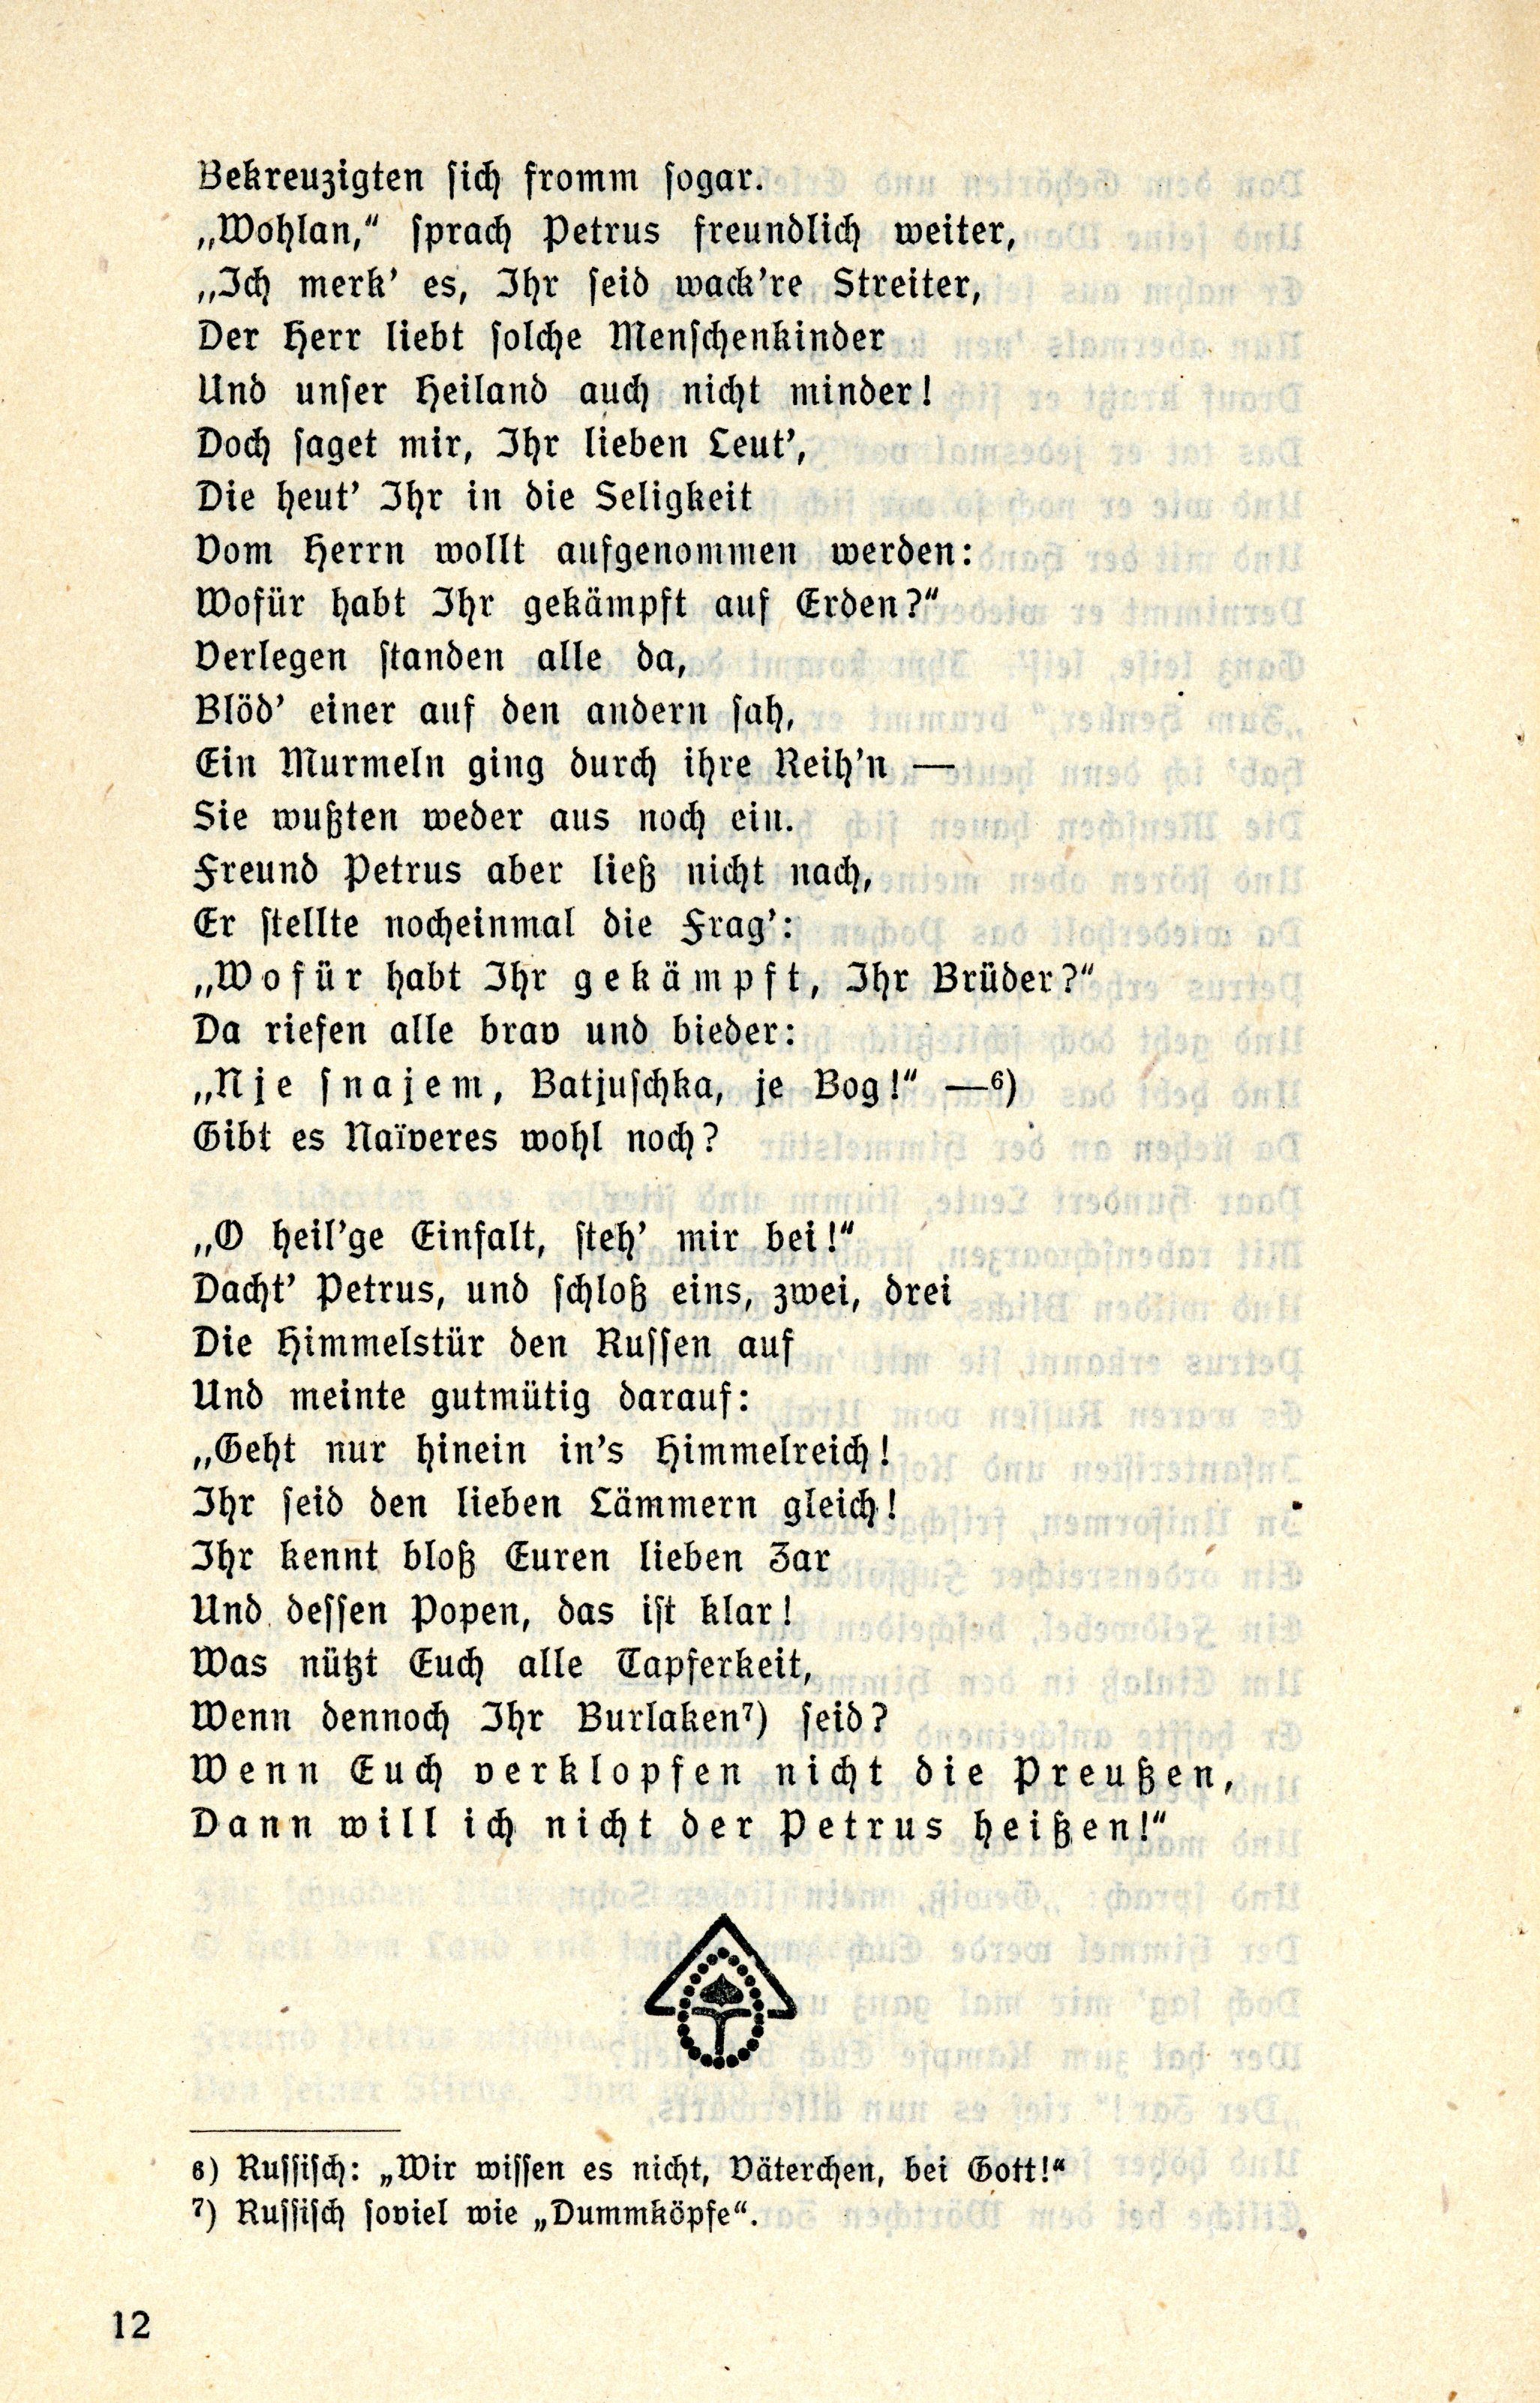 Der Balte im Maulkorb (1917) | 13. (12) Основной текст